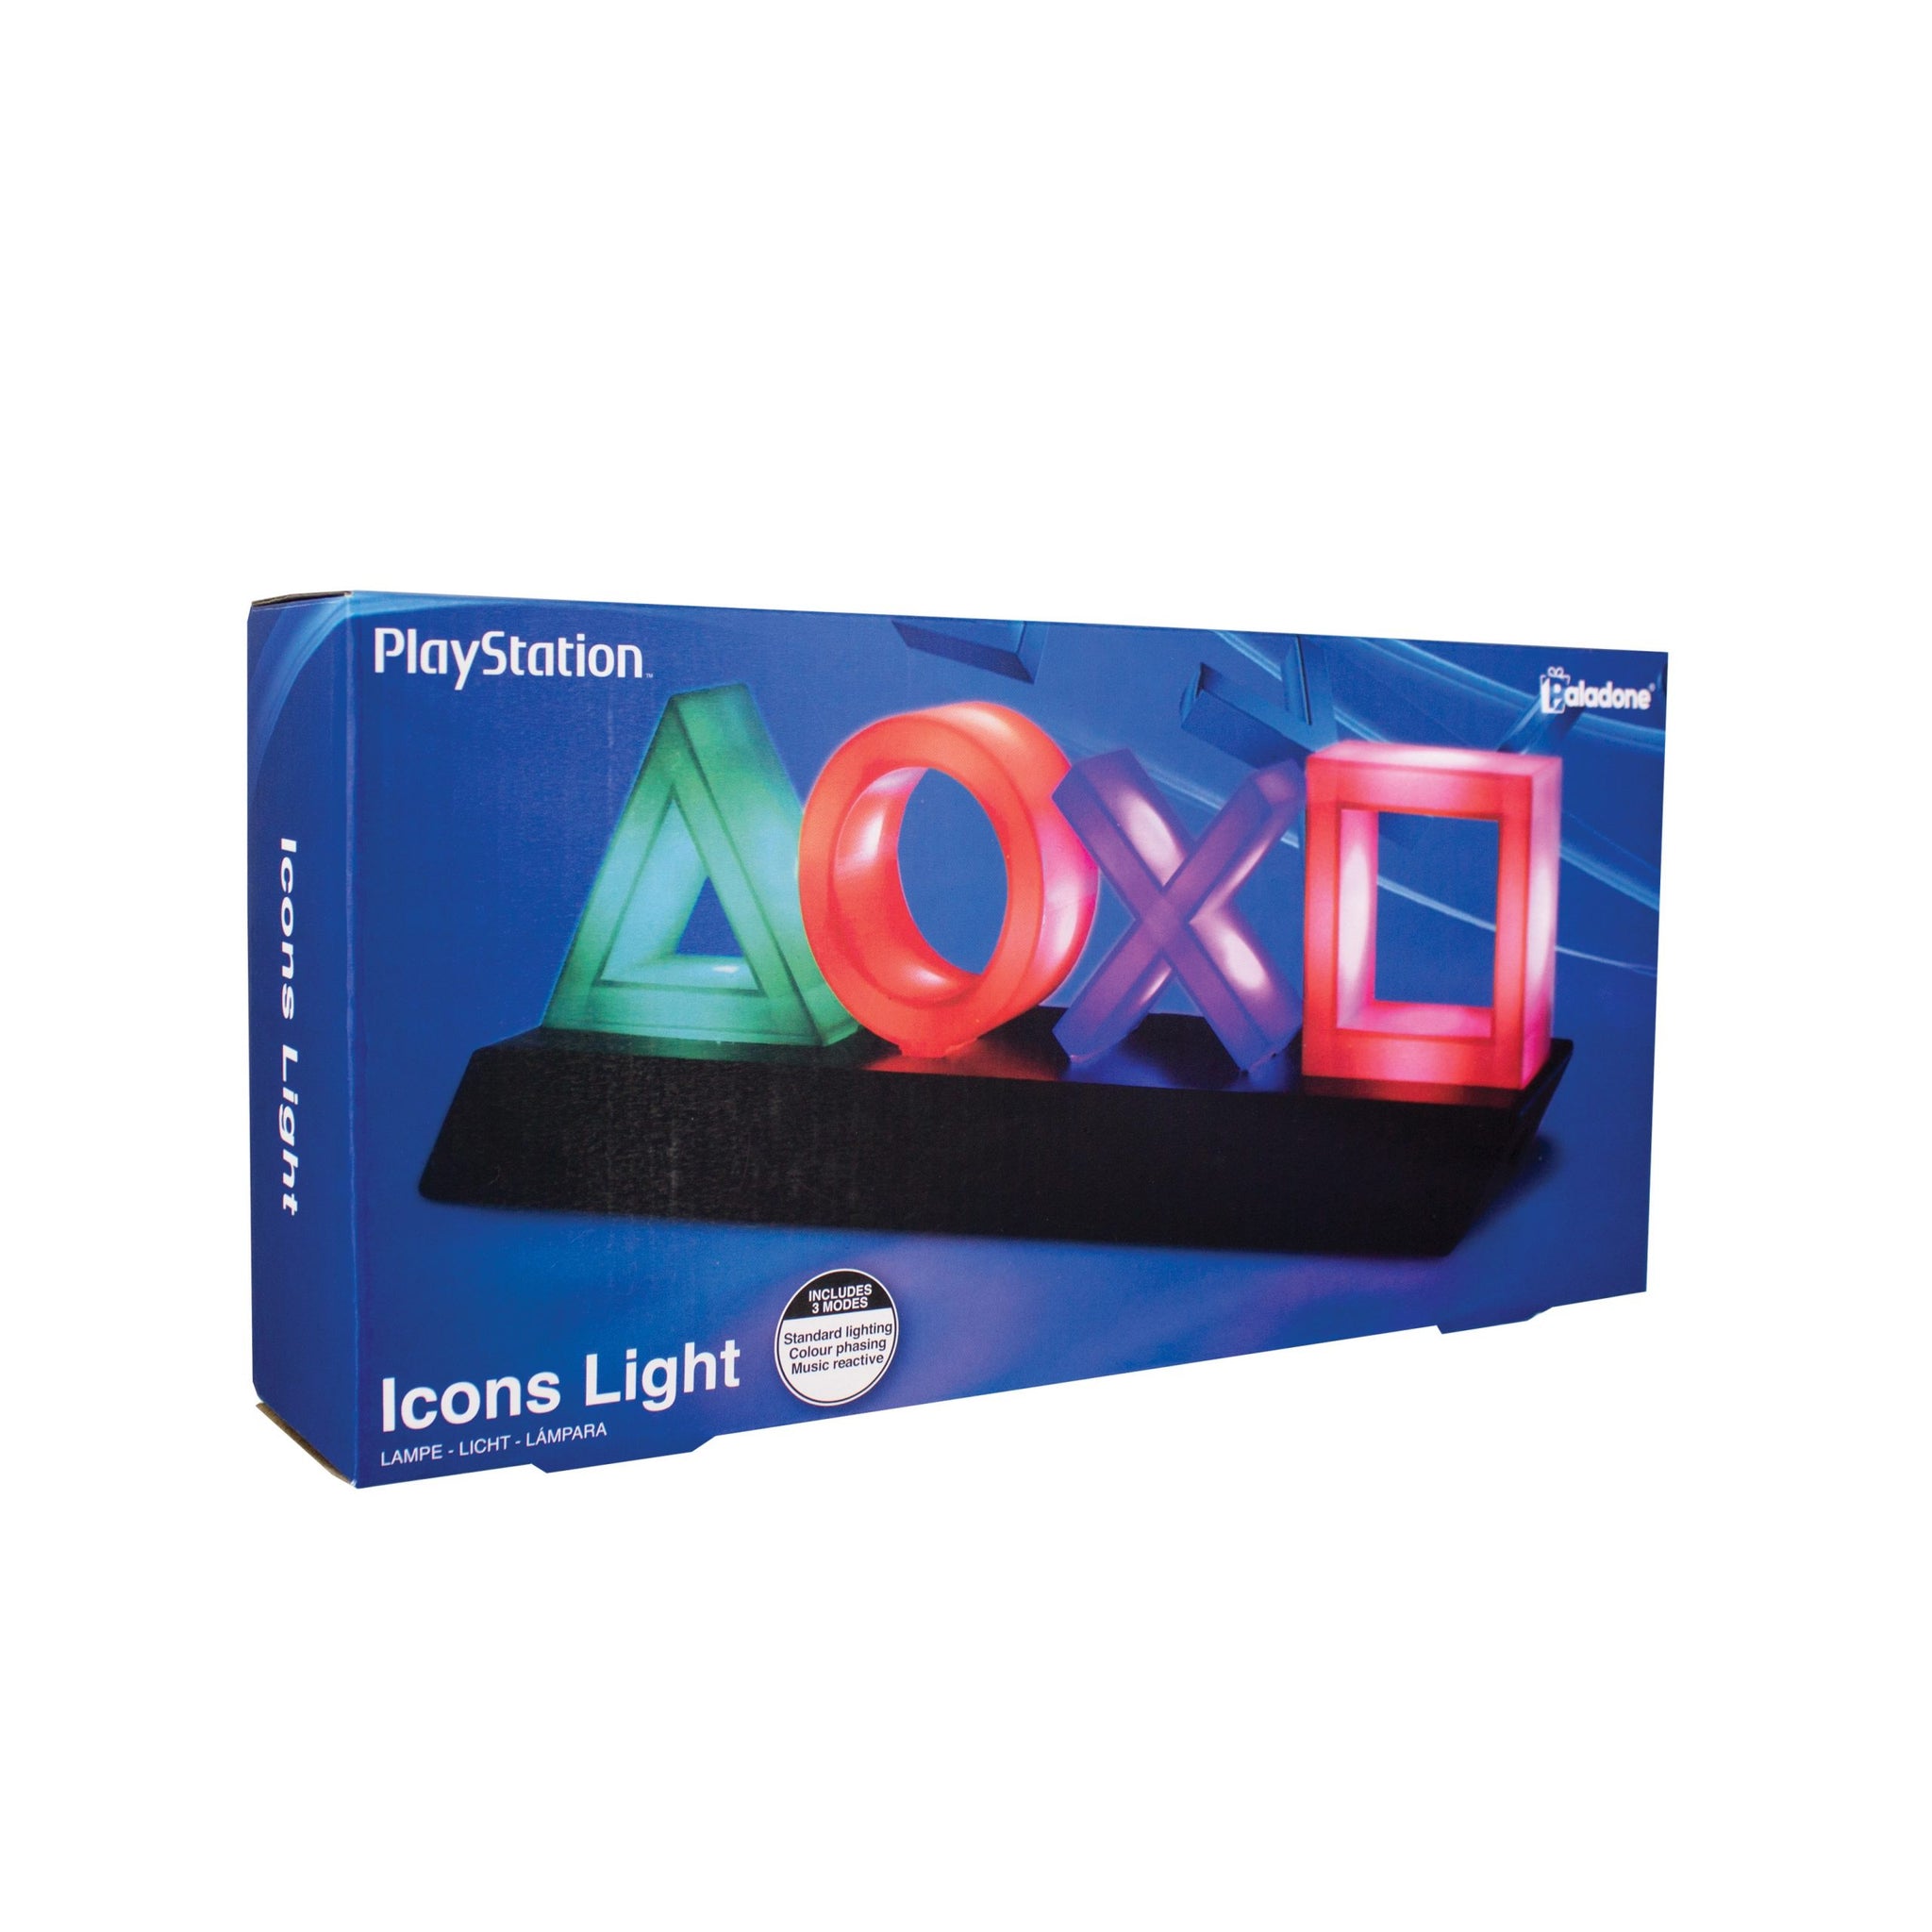 PlayStation Large Icons Light [Paladone]